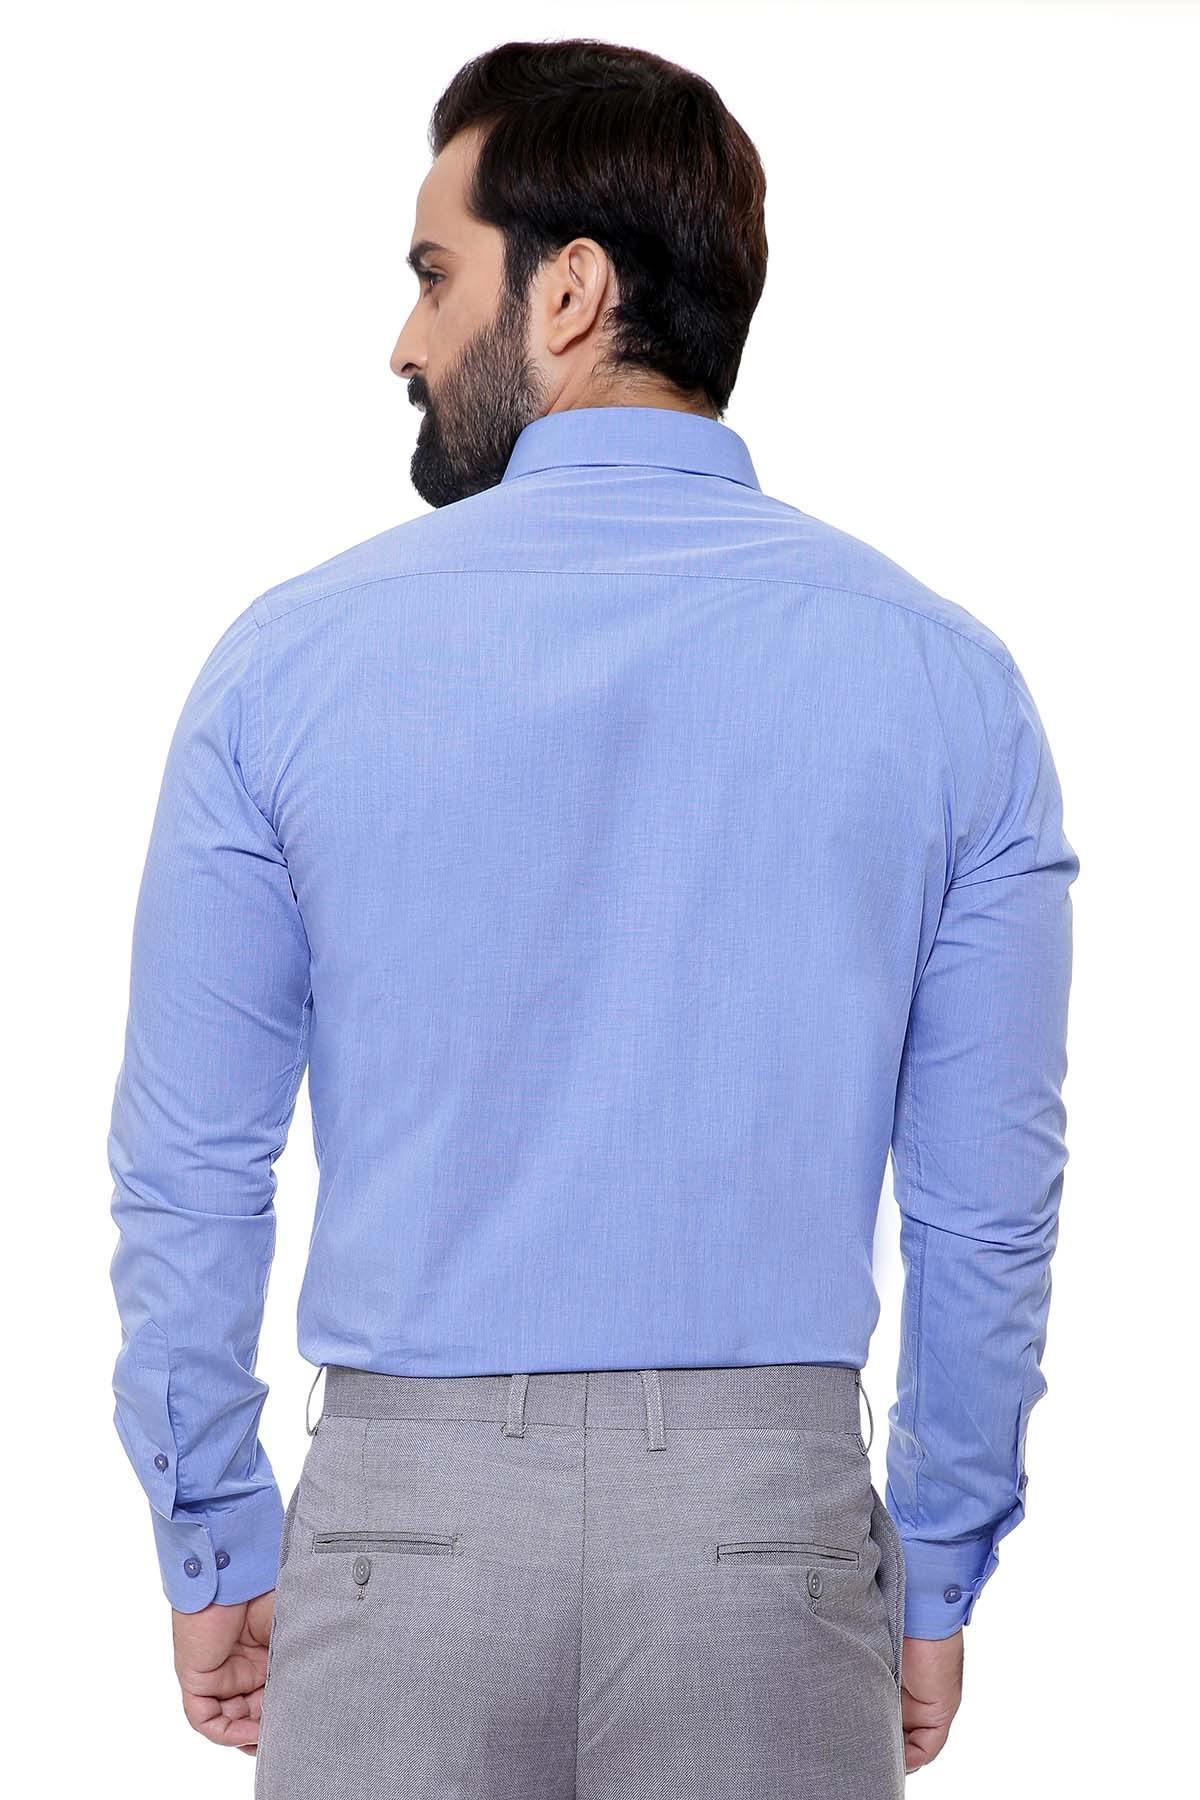 DRESS SHIRT FULL COLLAR SKY BLUE at Charcoal Clothing